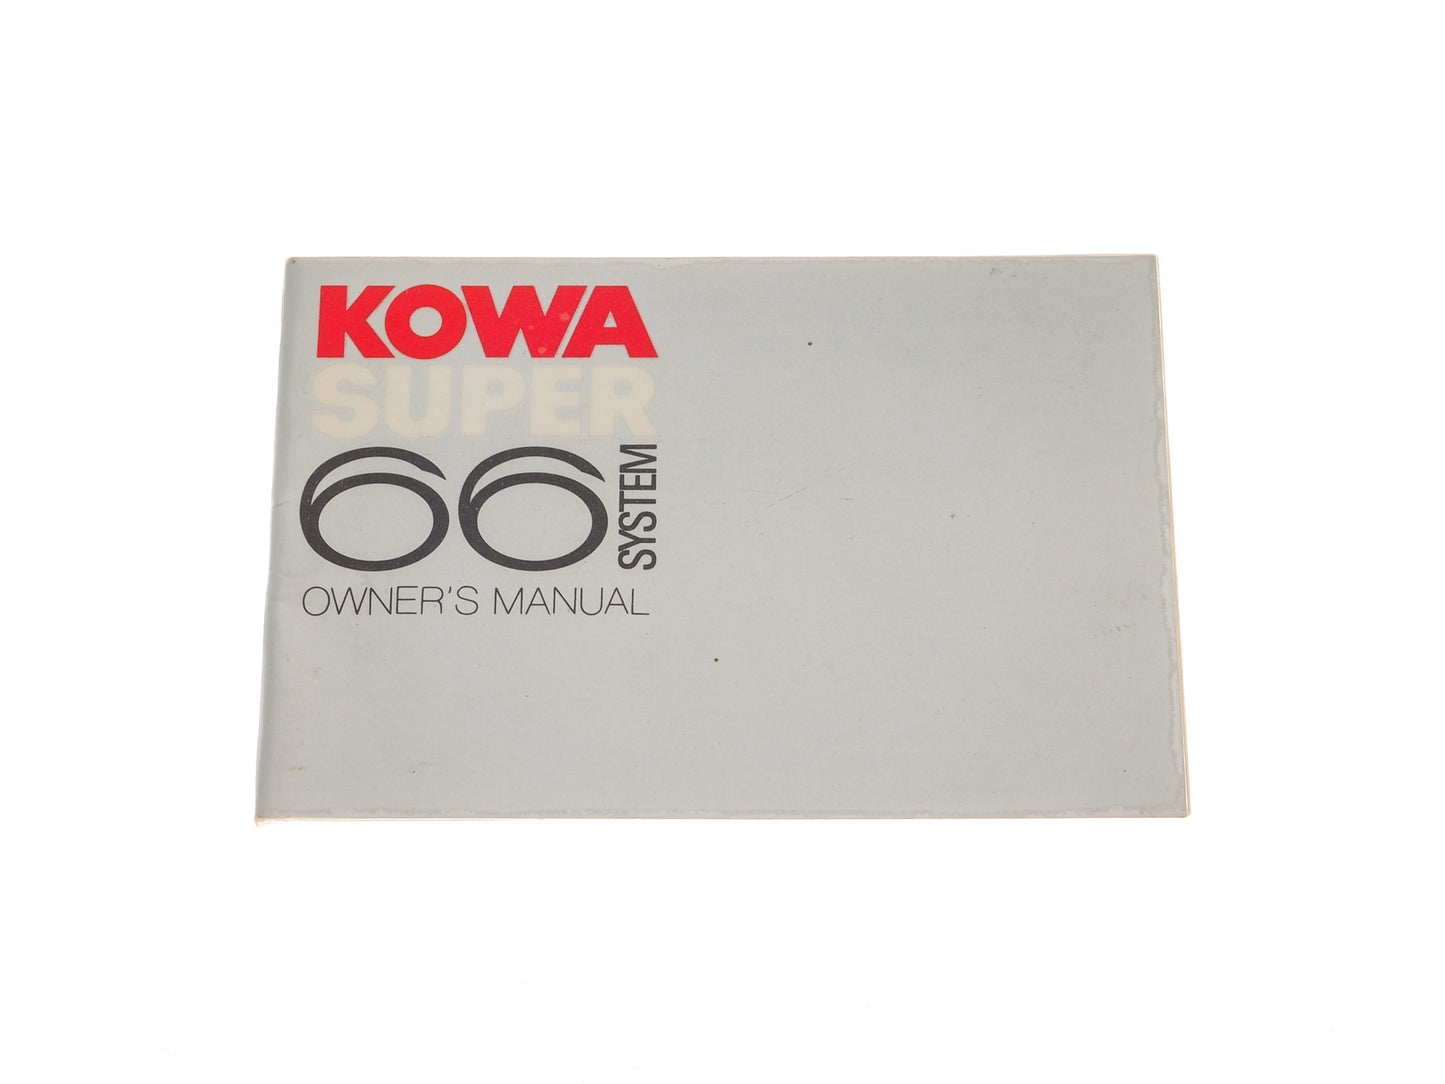 Kowa Super 66 Owner's Manual - Accessory